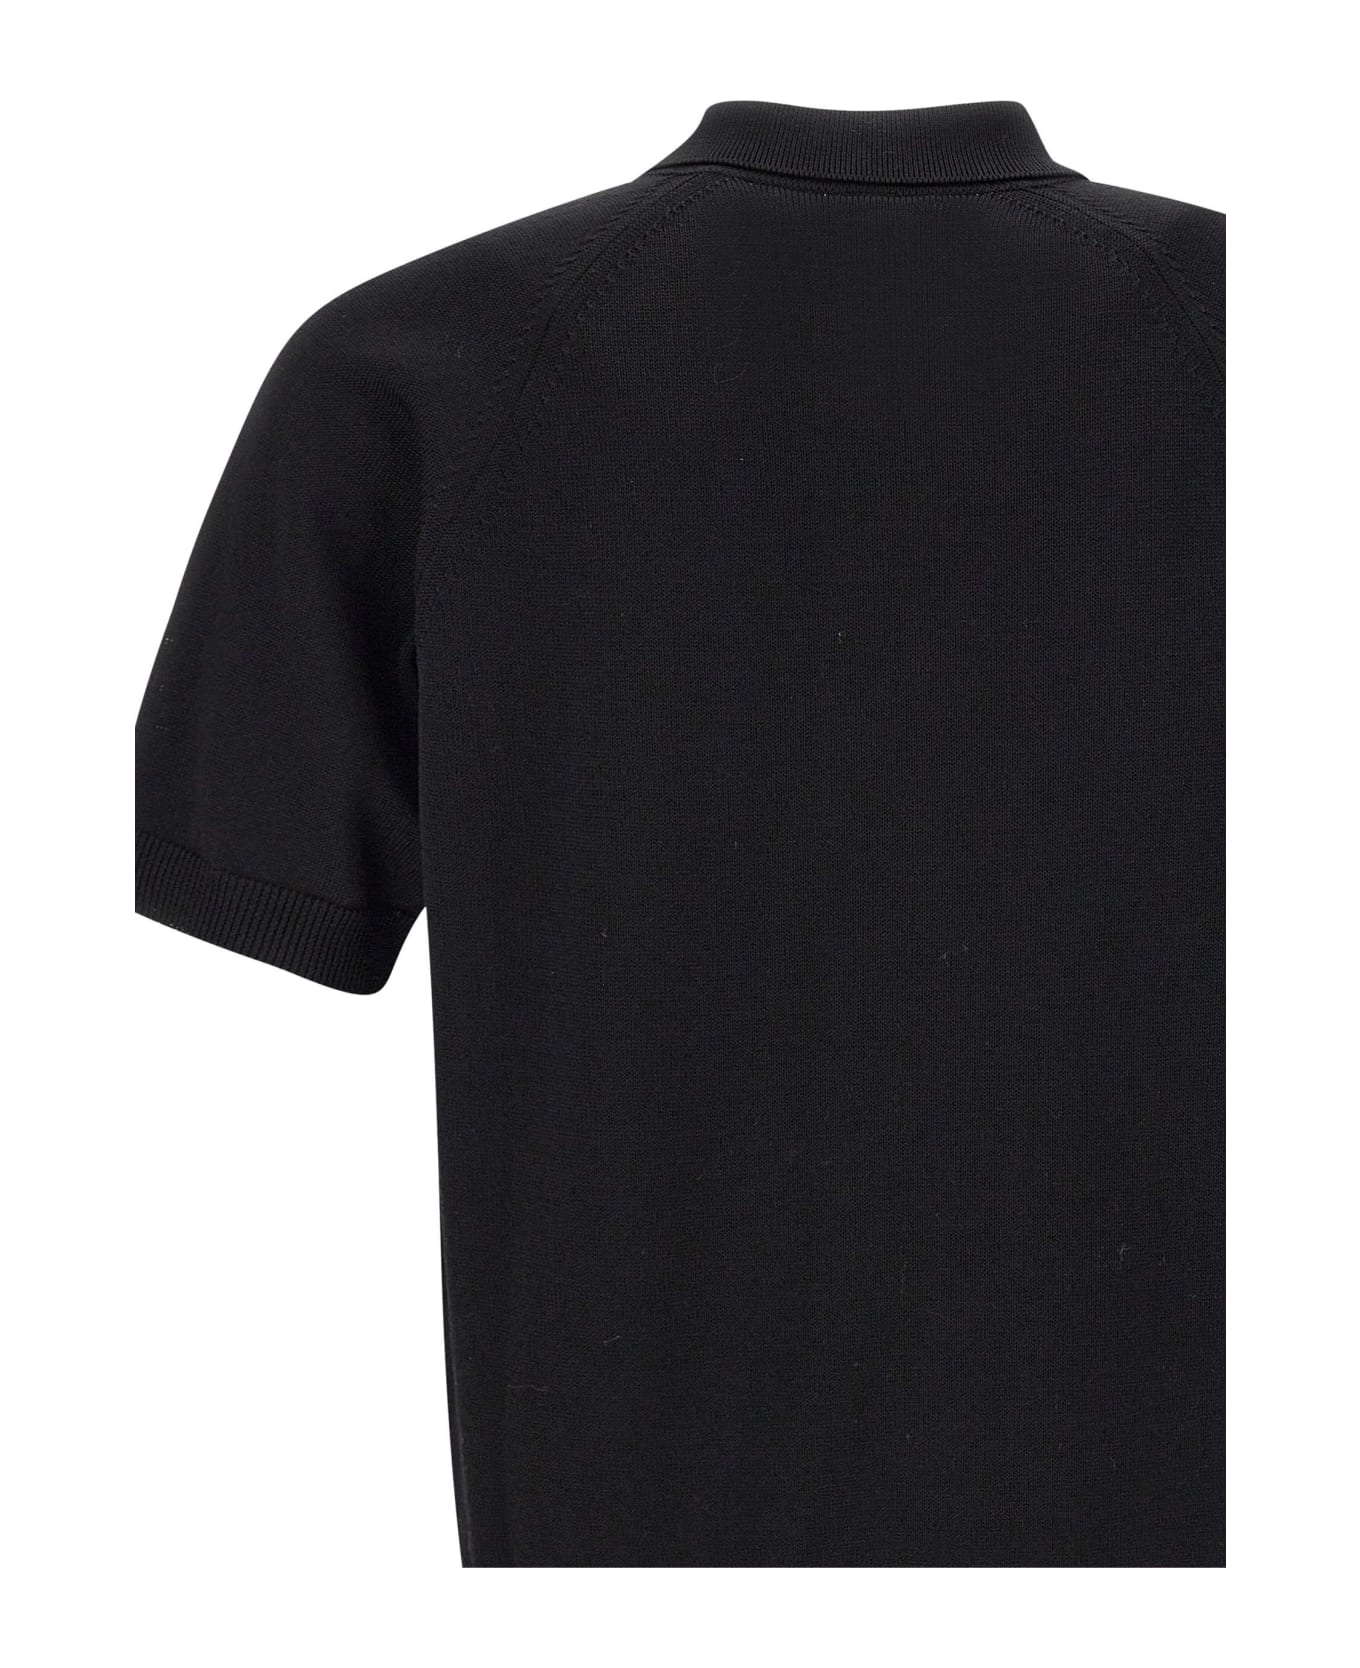 Lardini Polo Cotton And Viscose T-shirt - BLACK